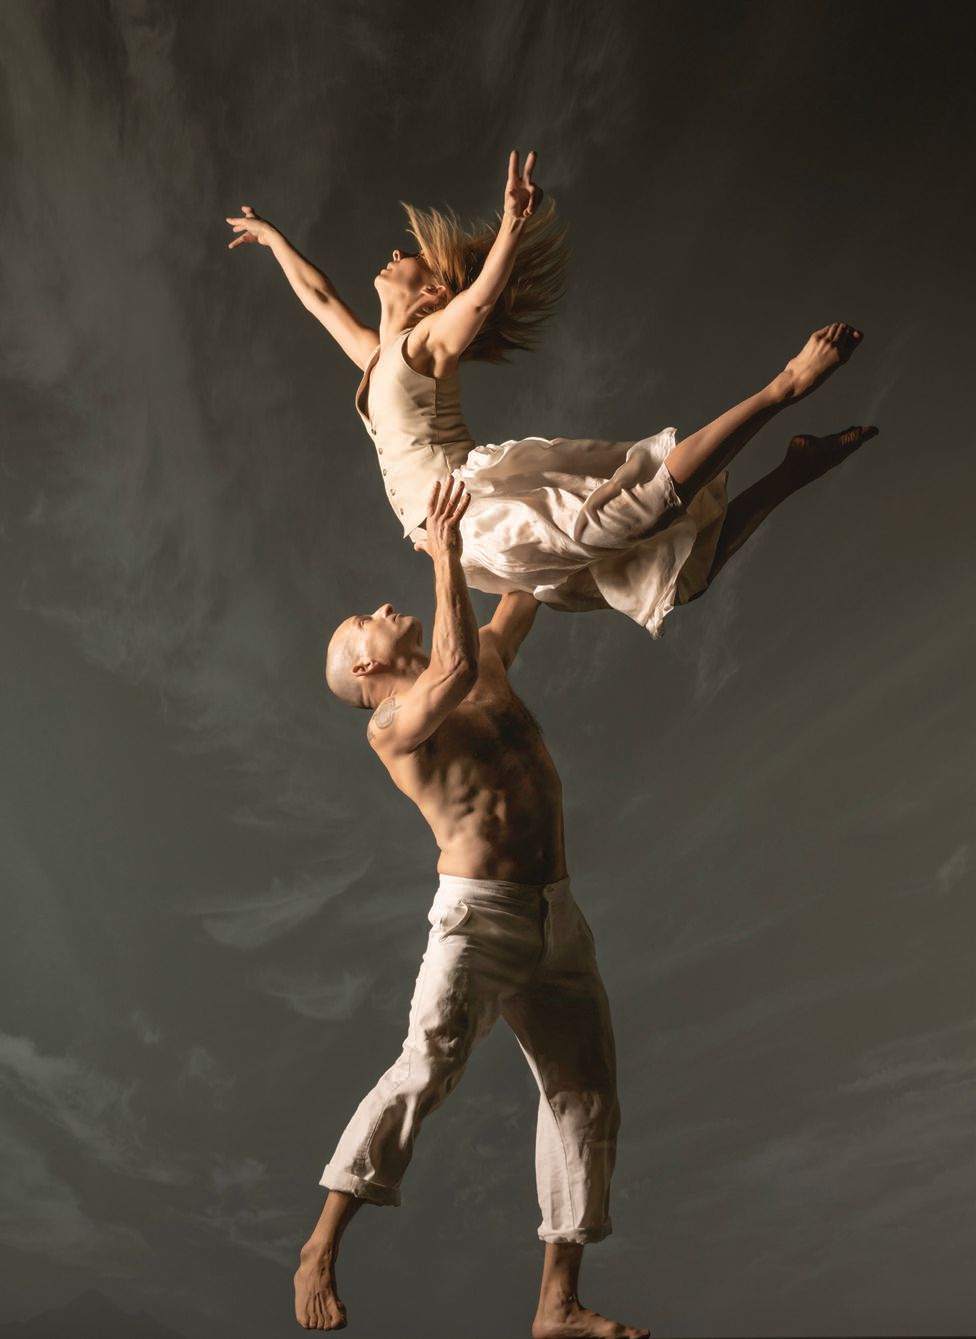 ODC Dance Company members Brandon W. Freeman “Private” and Rachel Furst PHOTO BY: RJ MUNA